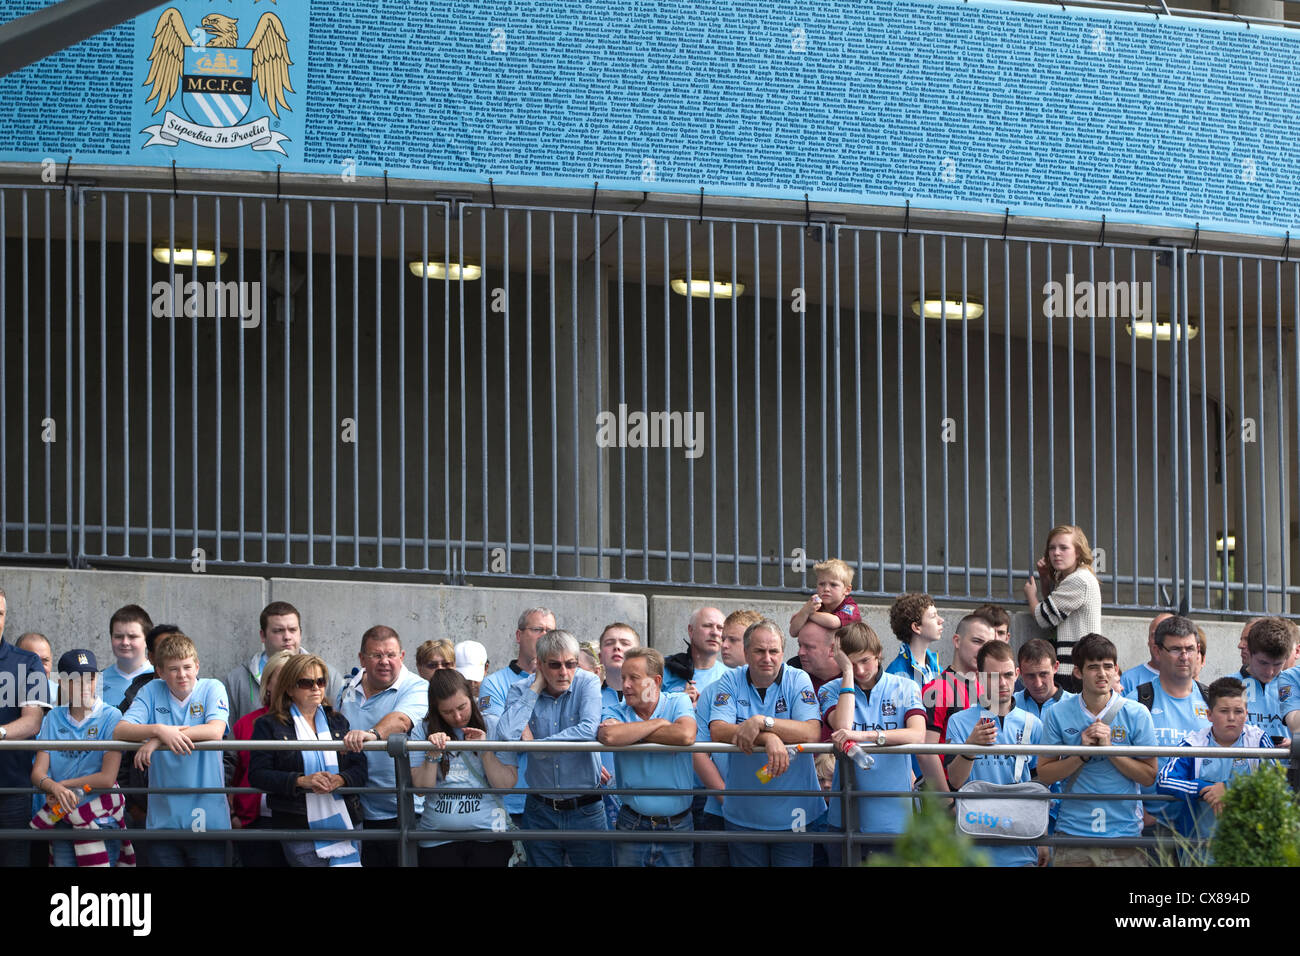 Fans waiting to meet their idols outside the Etihad Stadium, Manchester City Football Club, Manchester, England, United Kingdom Stock Photo